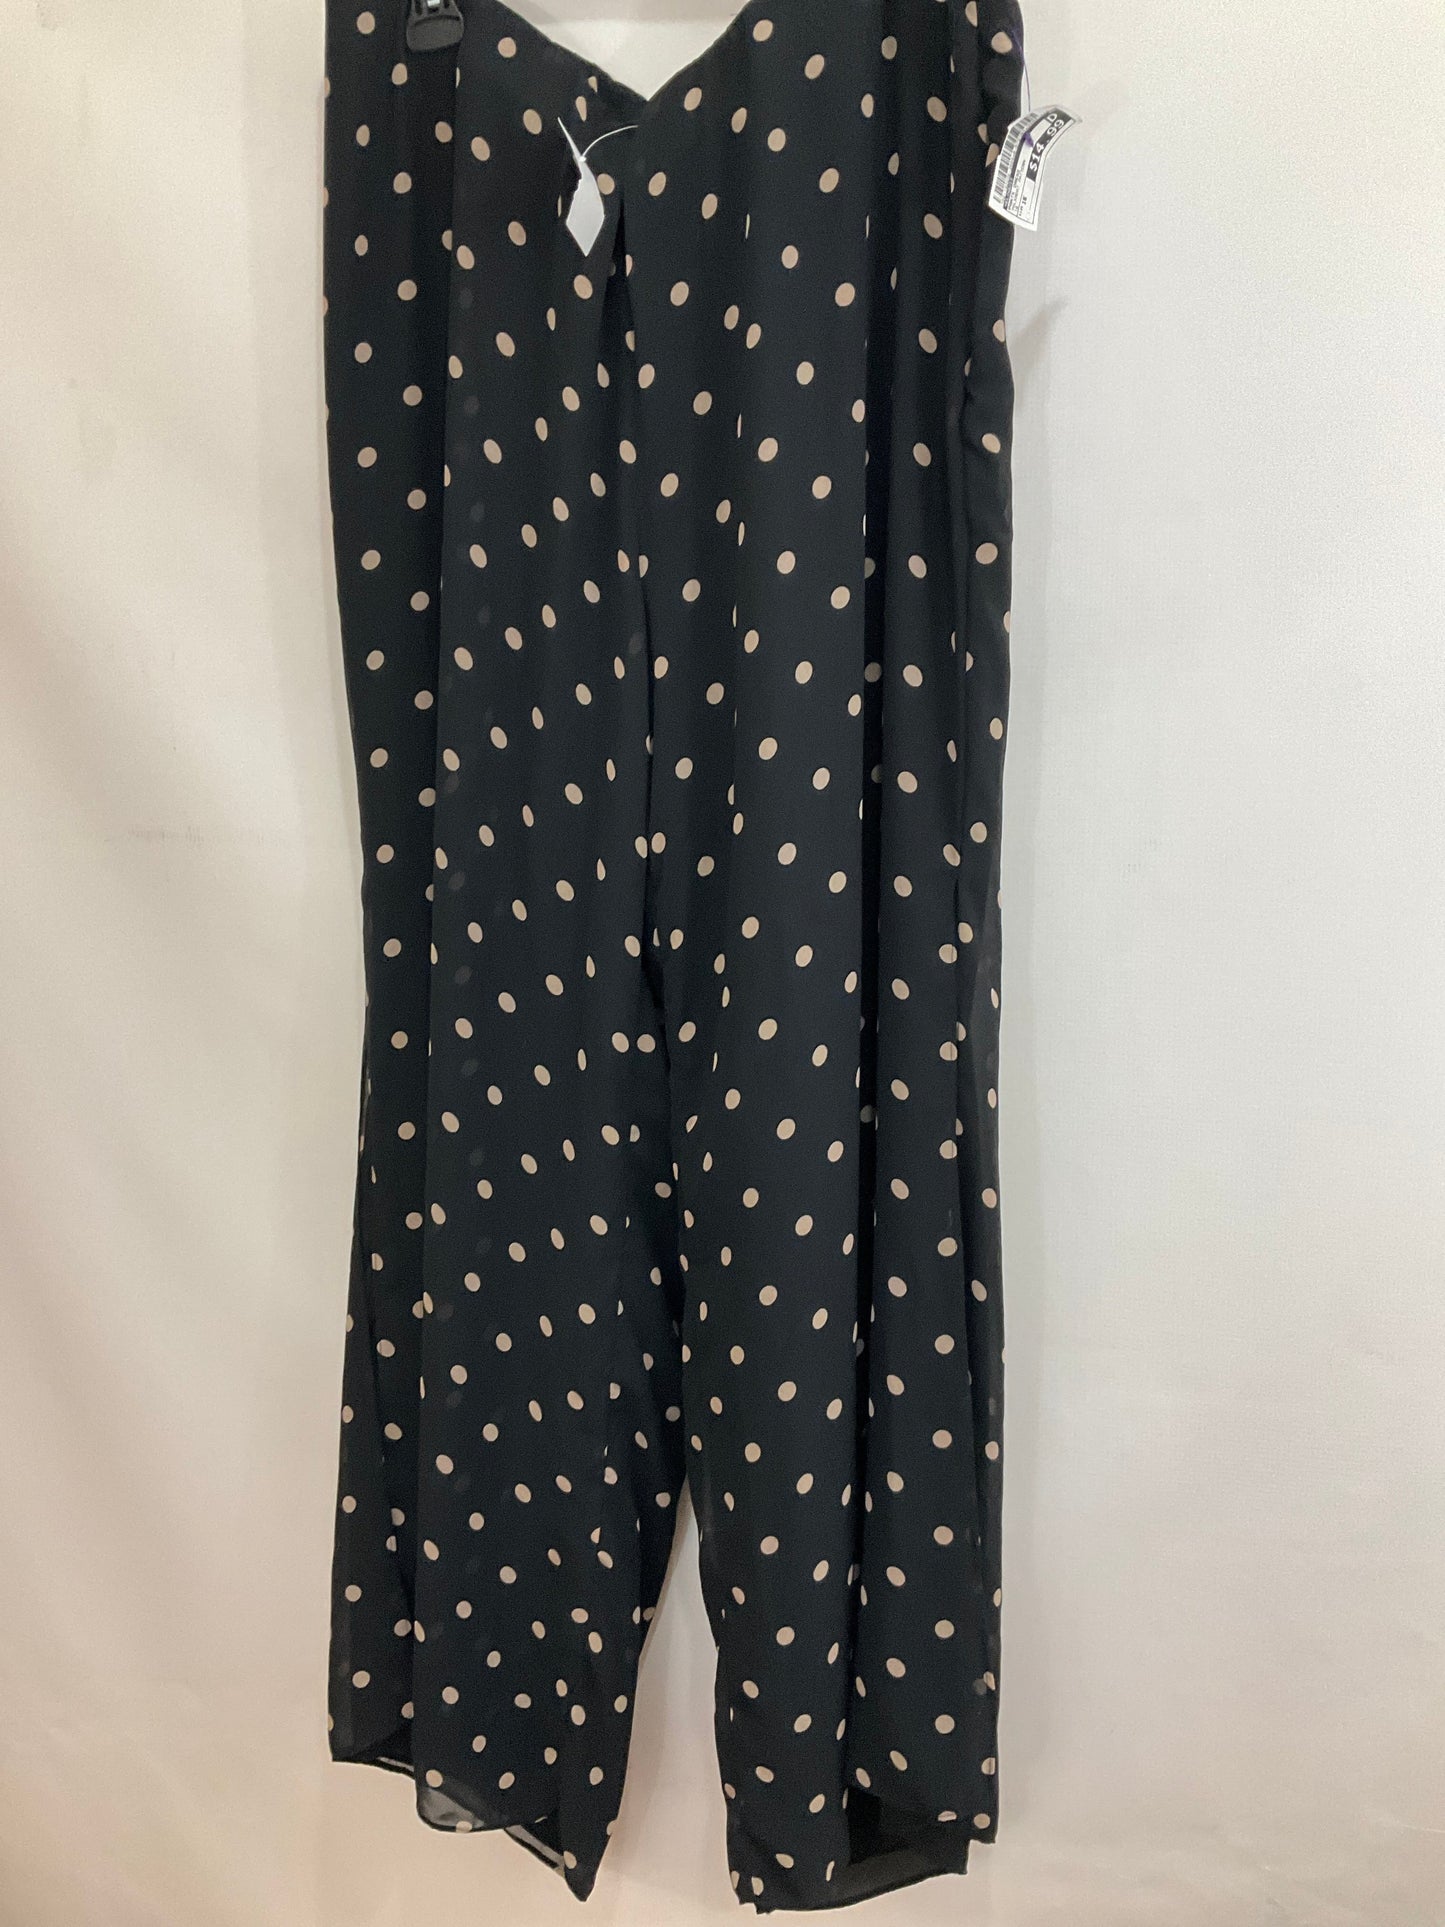 Polkadot Pattern Pants Dress Eloquii, Size 16